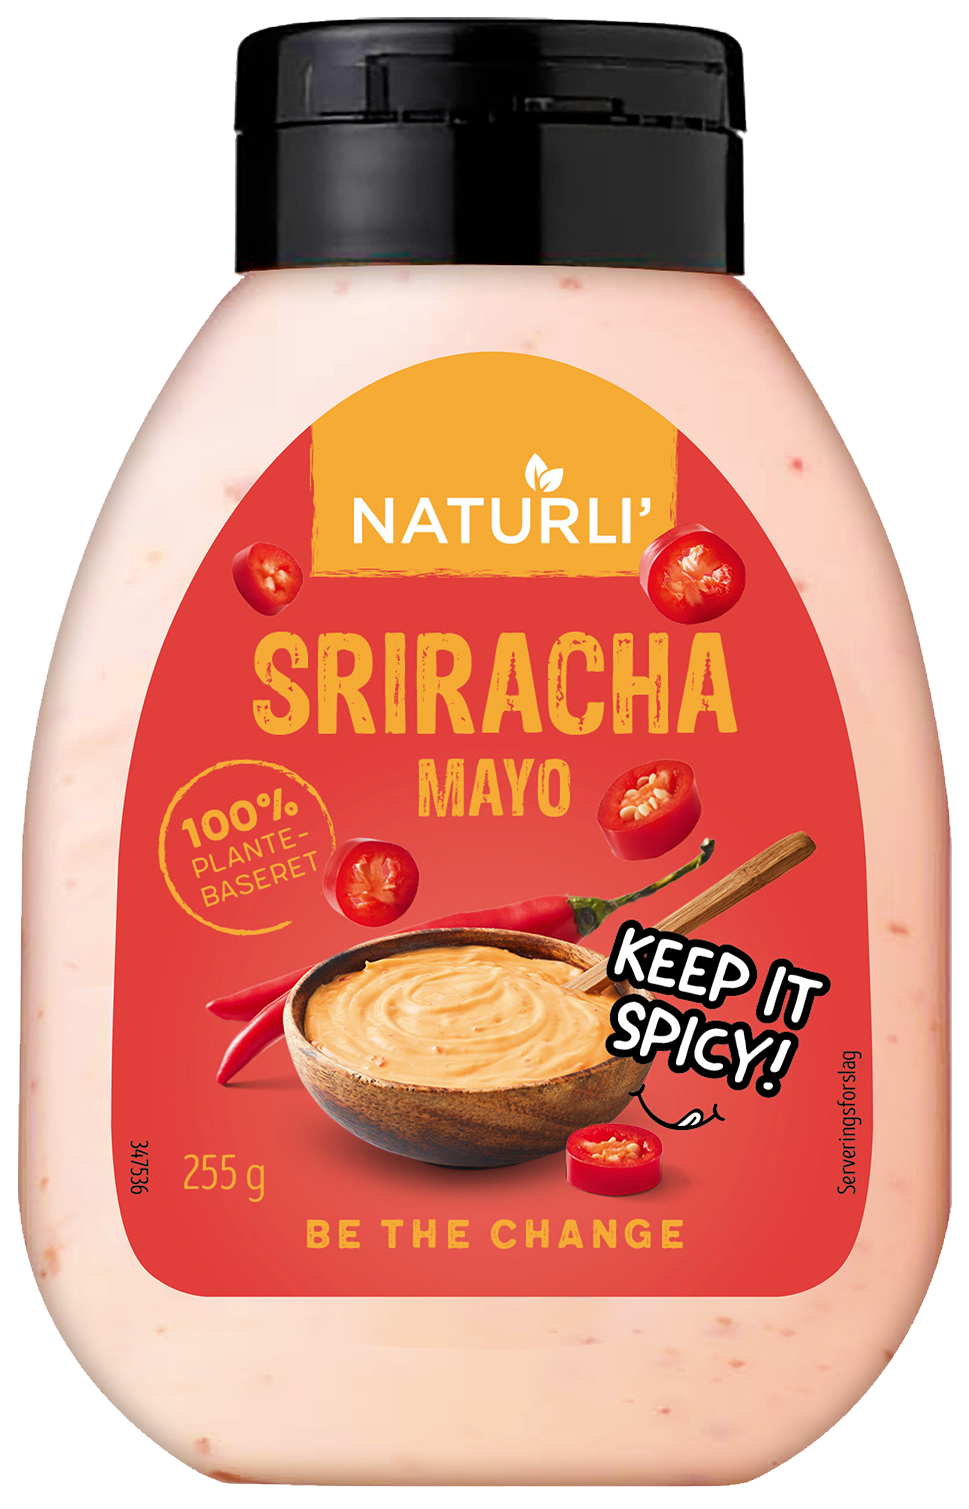 Mayo Sriracha – Jumping Jackal